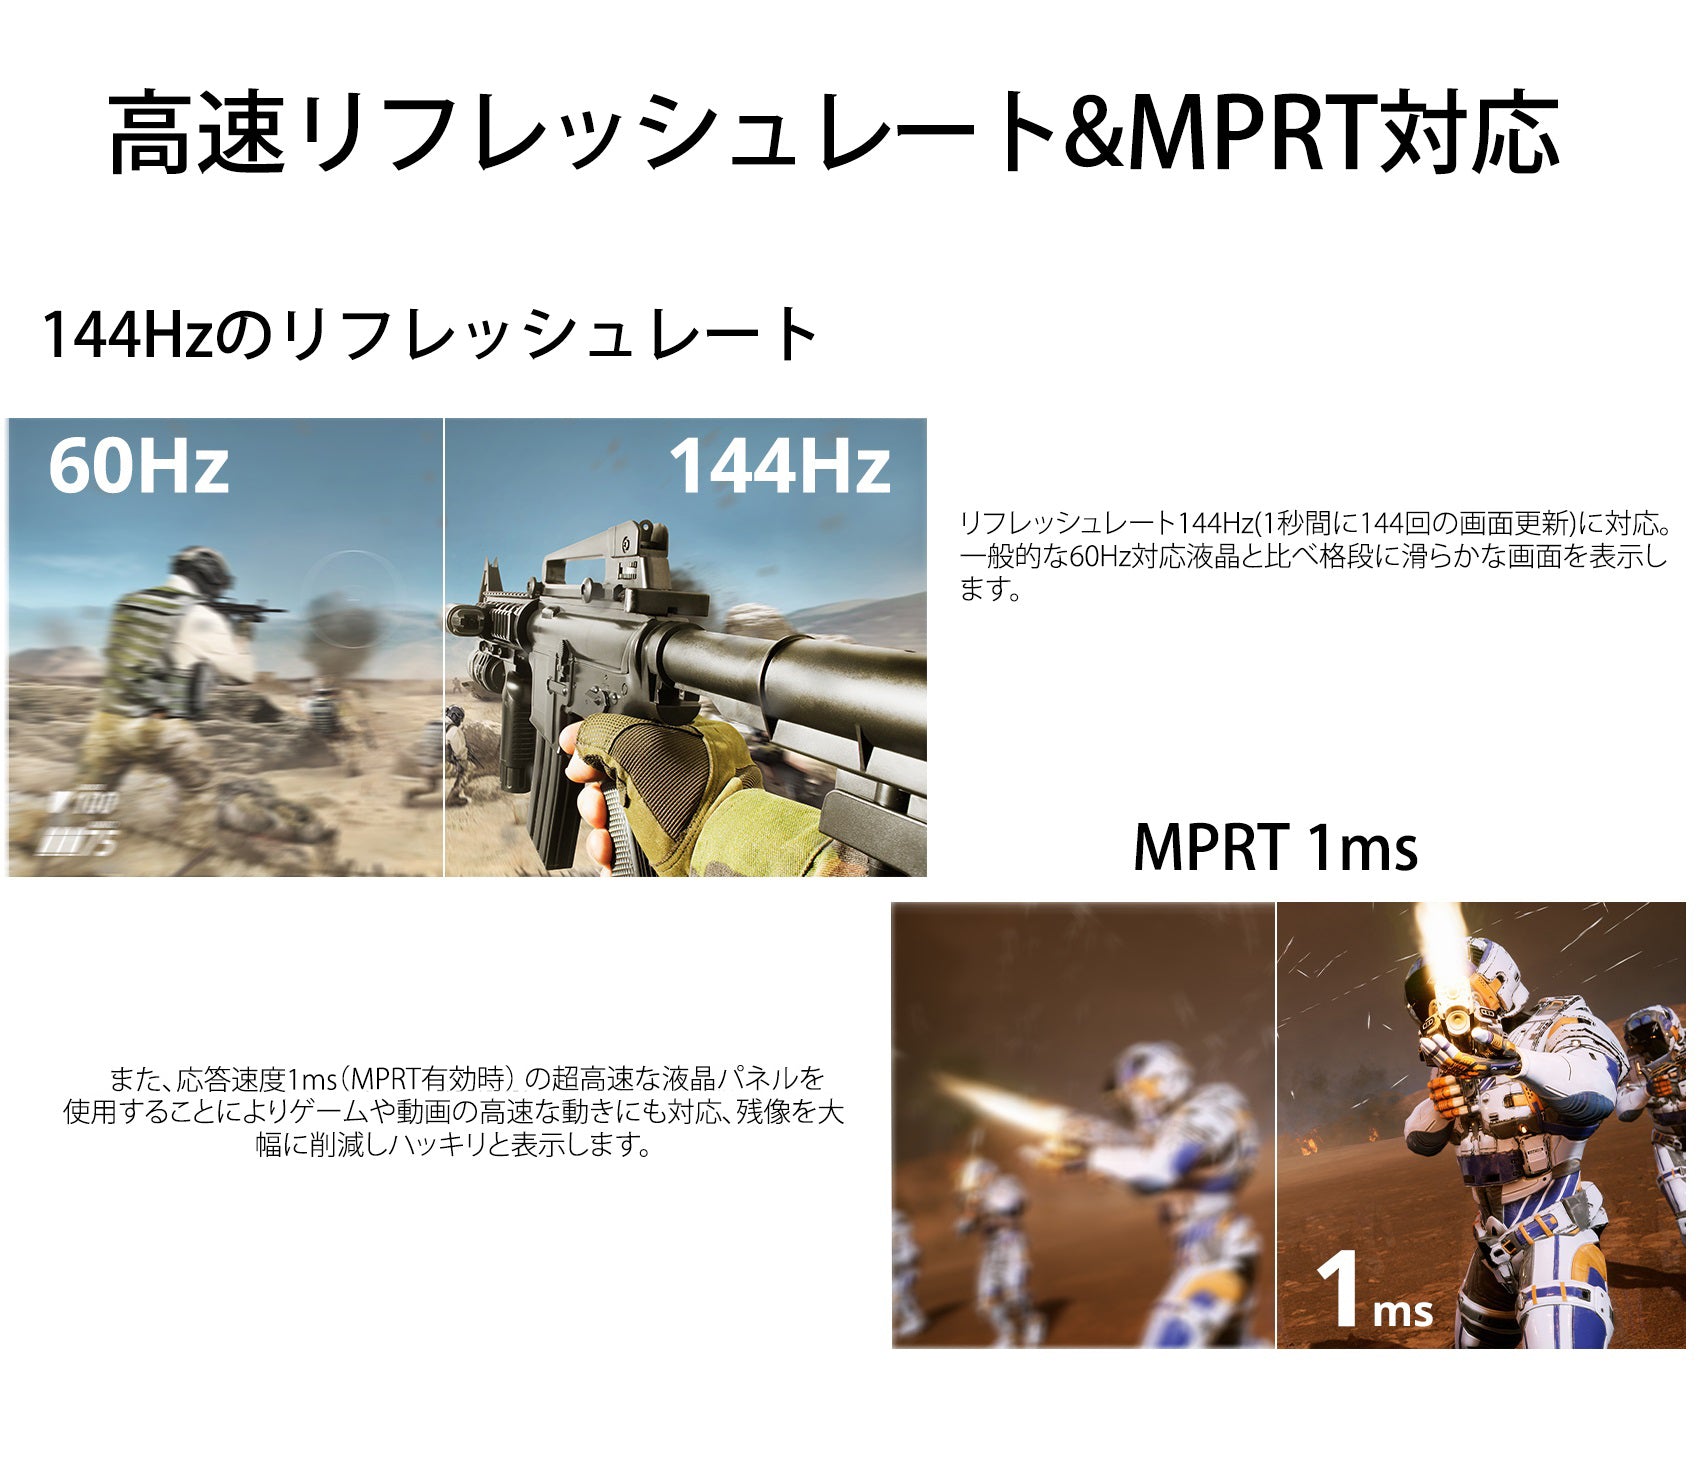 JAPANNEXT HDMI 2.1対応 31.5型 144Hz対応４Kゲーミングモニター JN